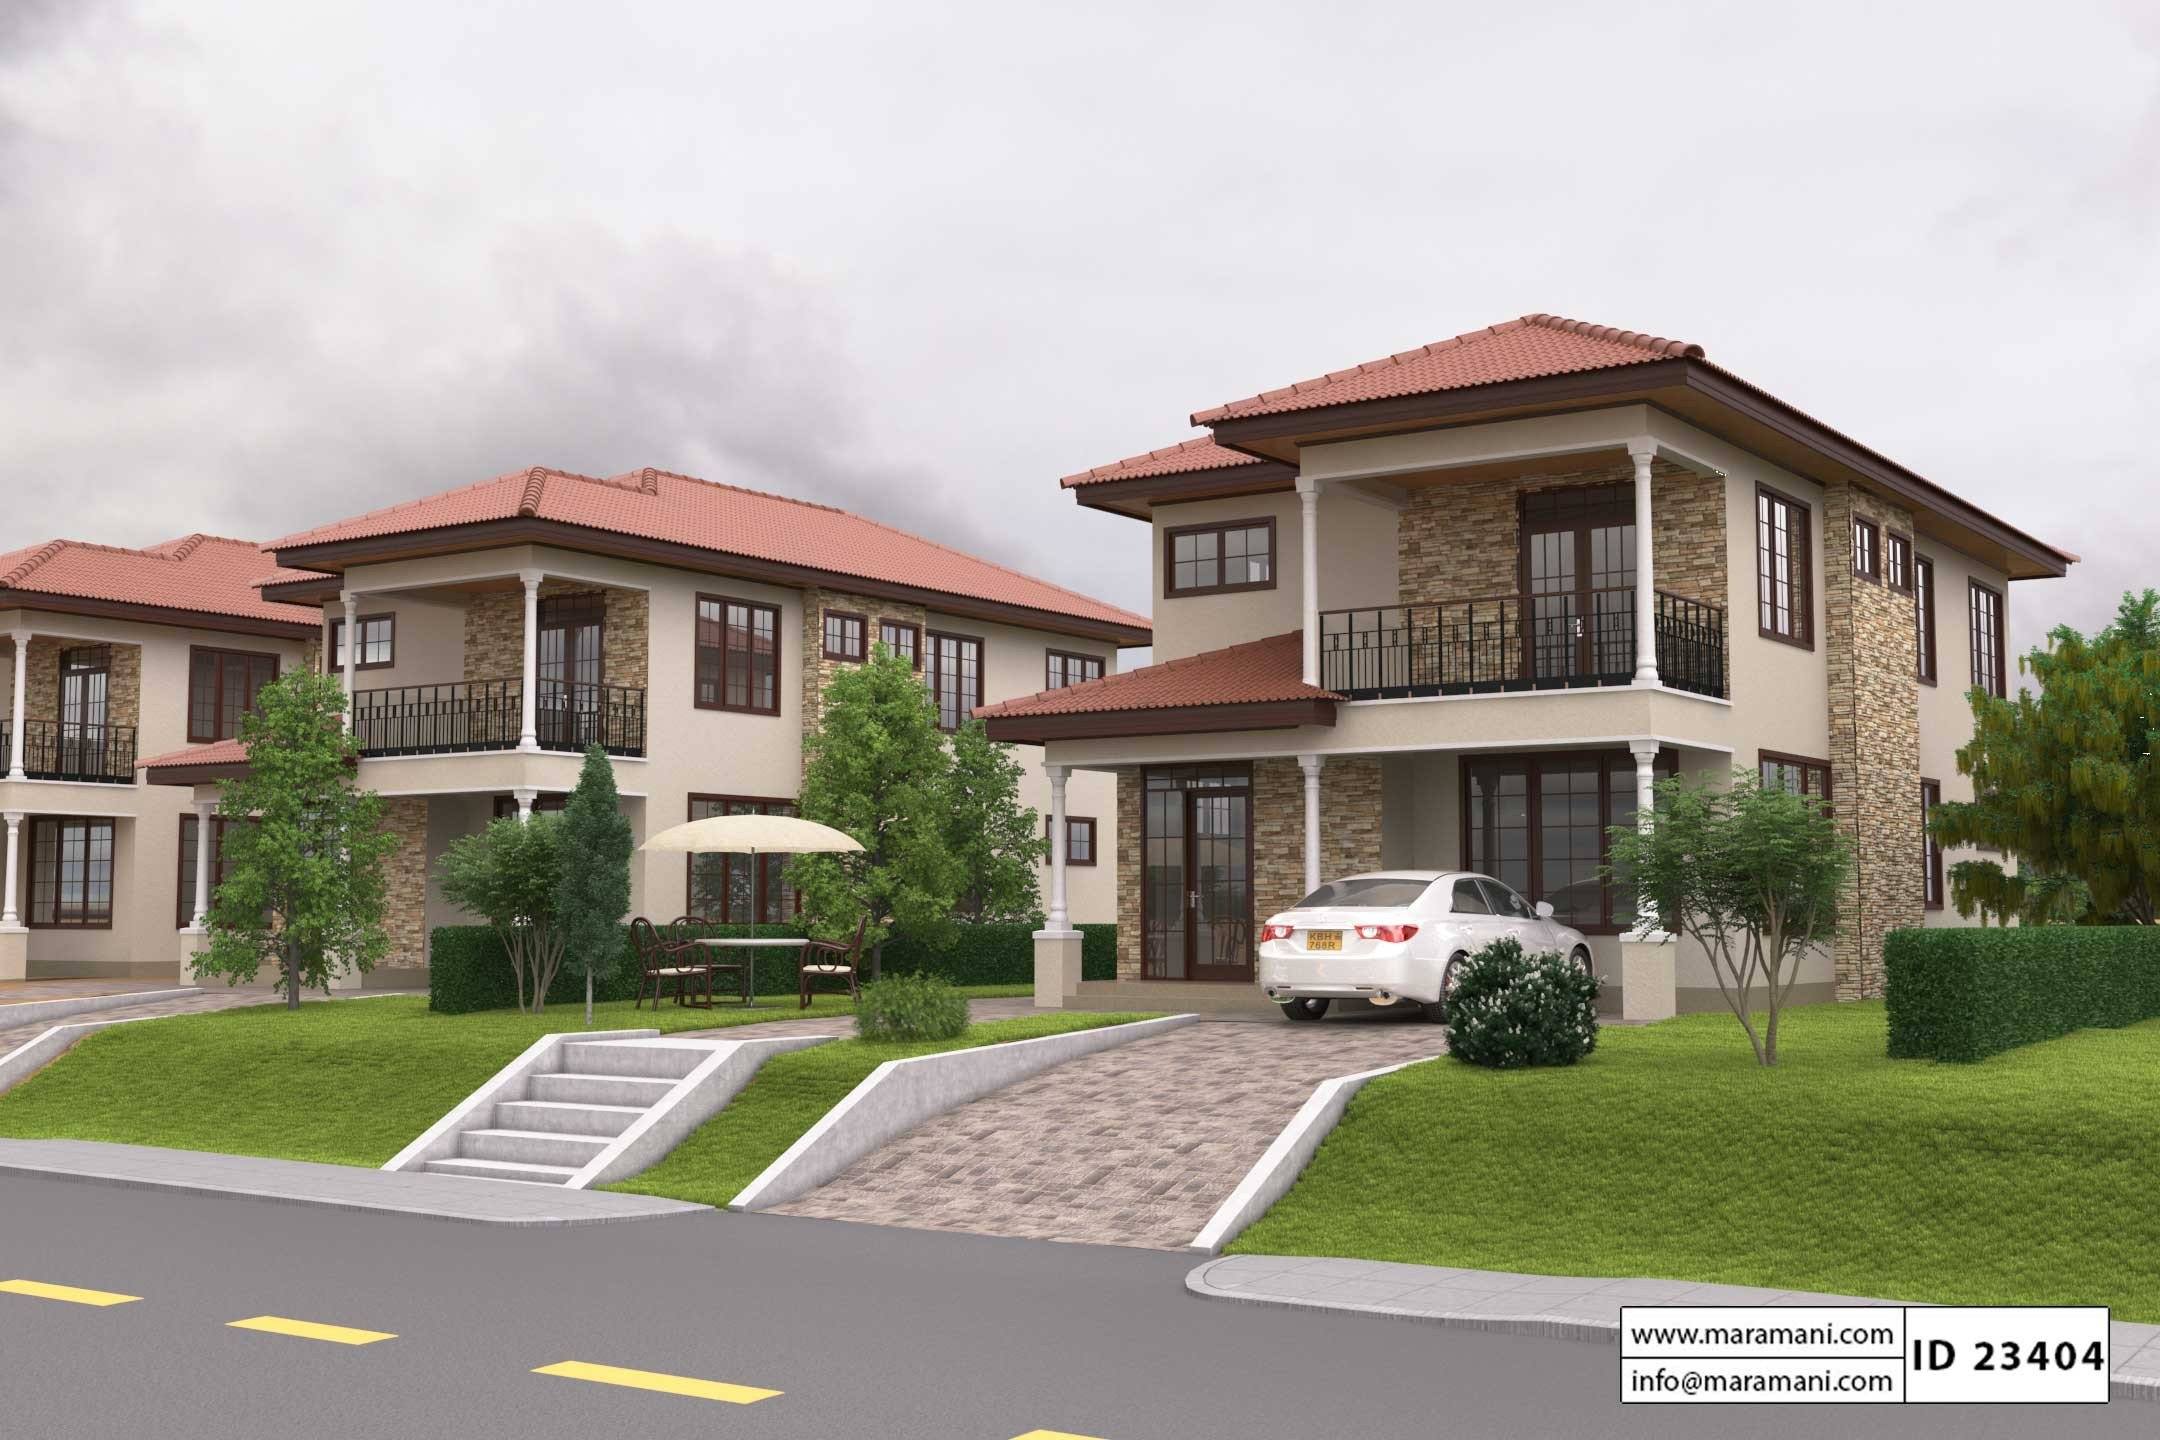 House Designs Kenya Plans By